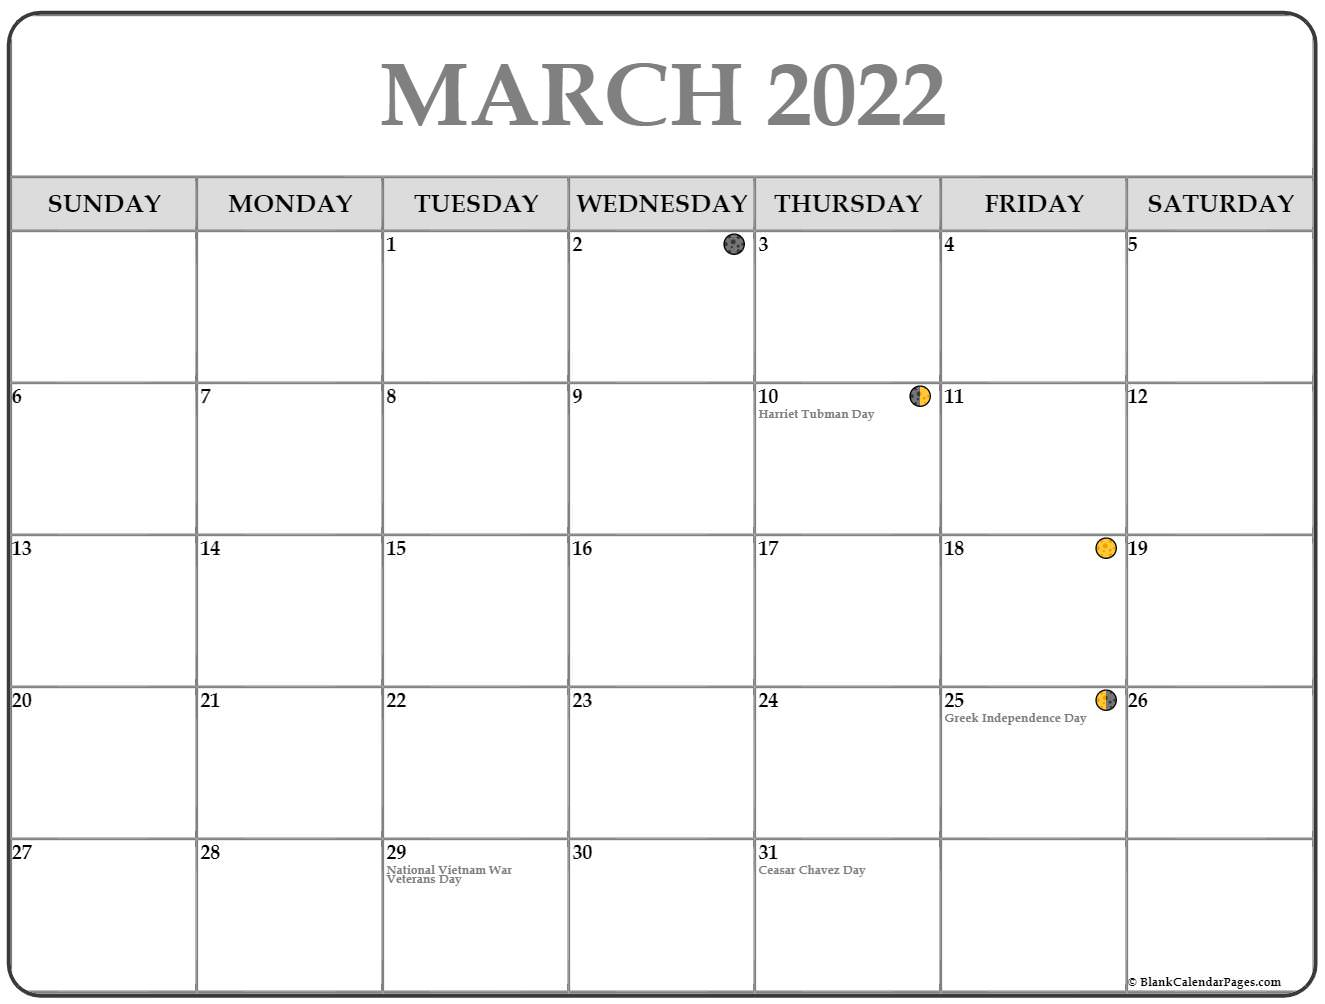 Get Islamic Calendar 2022 March